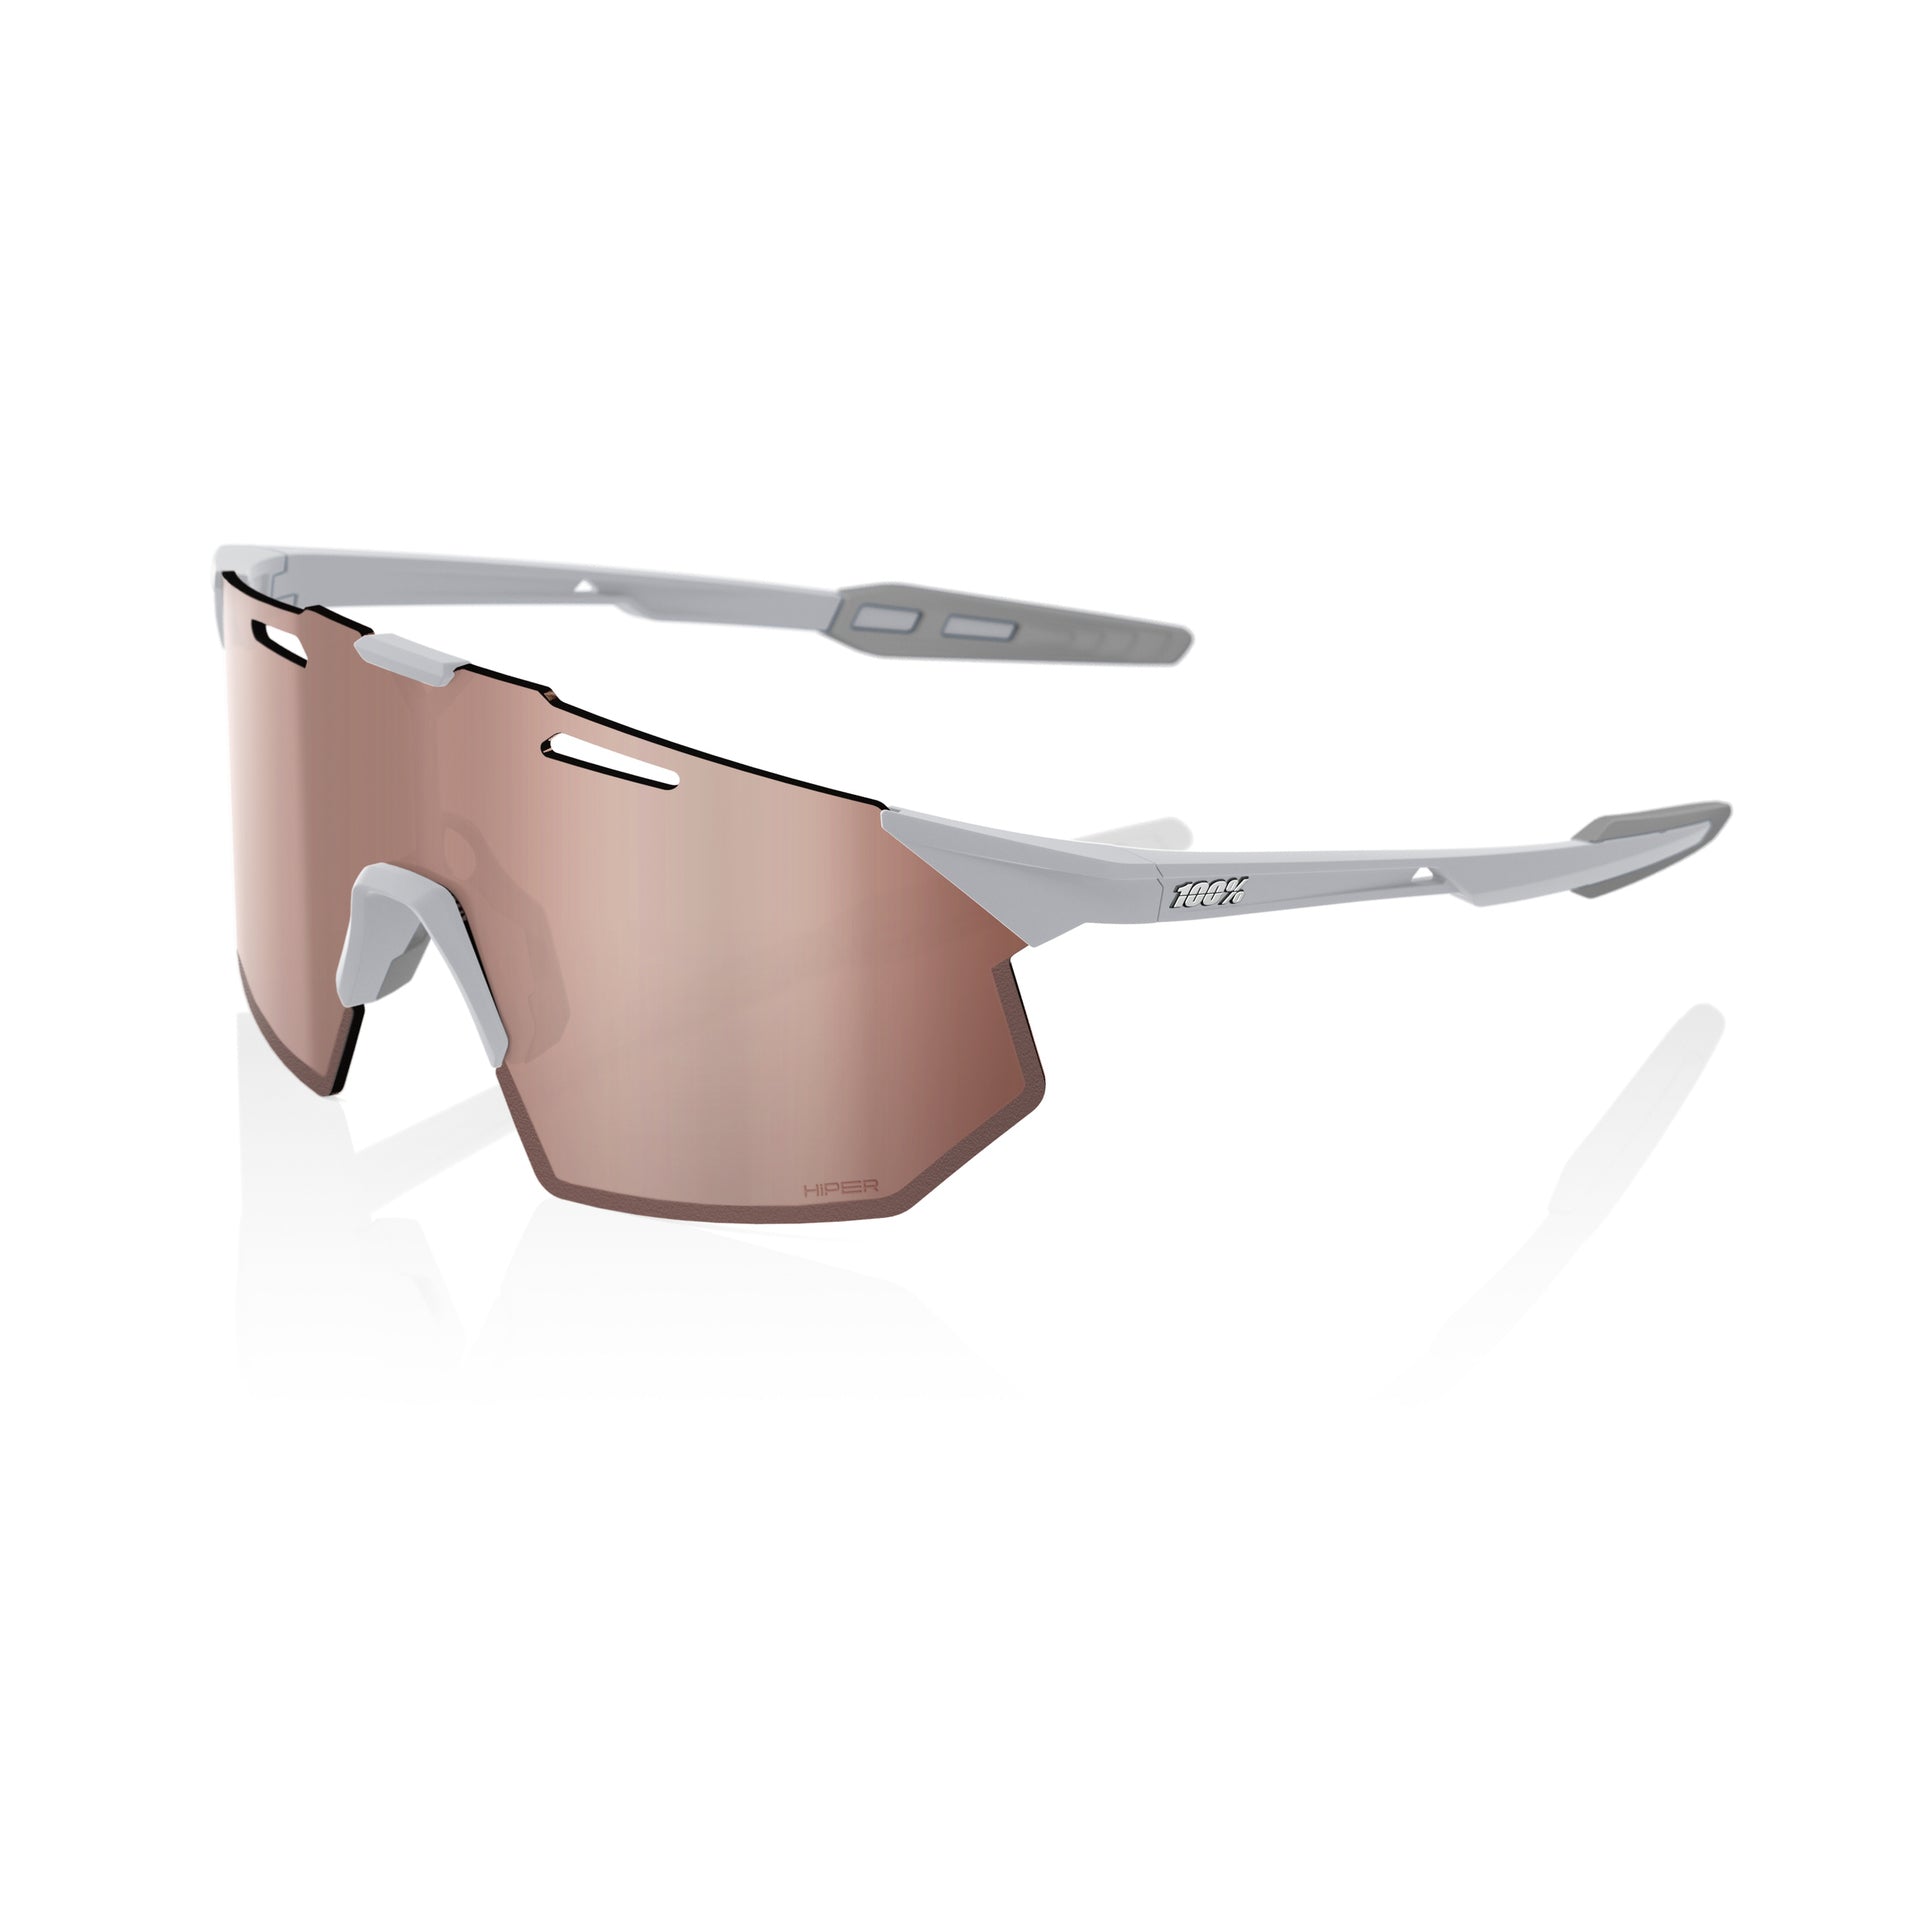 100 Percent Hypercraft SQ Sunglasses - One Size Fits Most - Matte Stone Grey - HiPER Crimson Silver Mirror Lens - Image 1